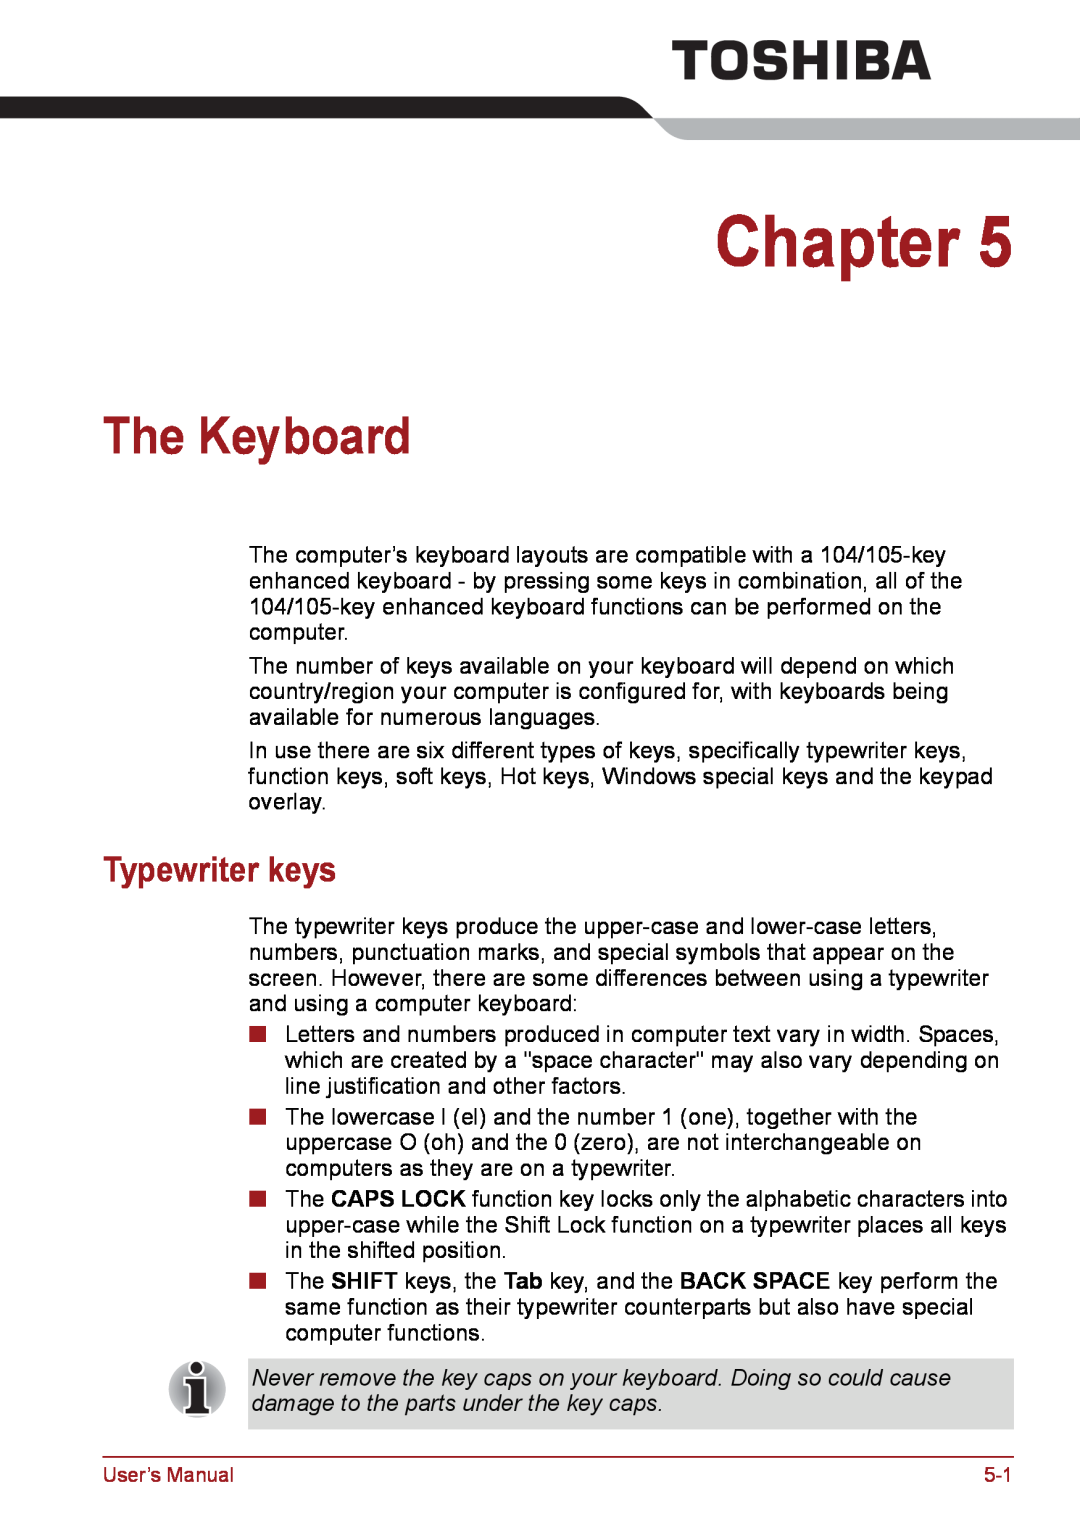 Toshiba PSC08U-02D01D user manual The Keyboard, Typewriter keys, Chapter 